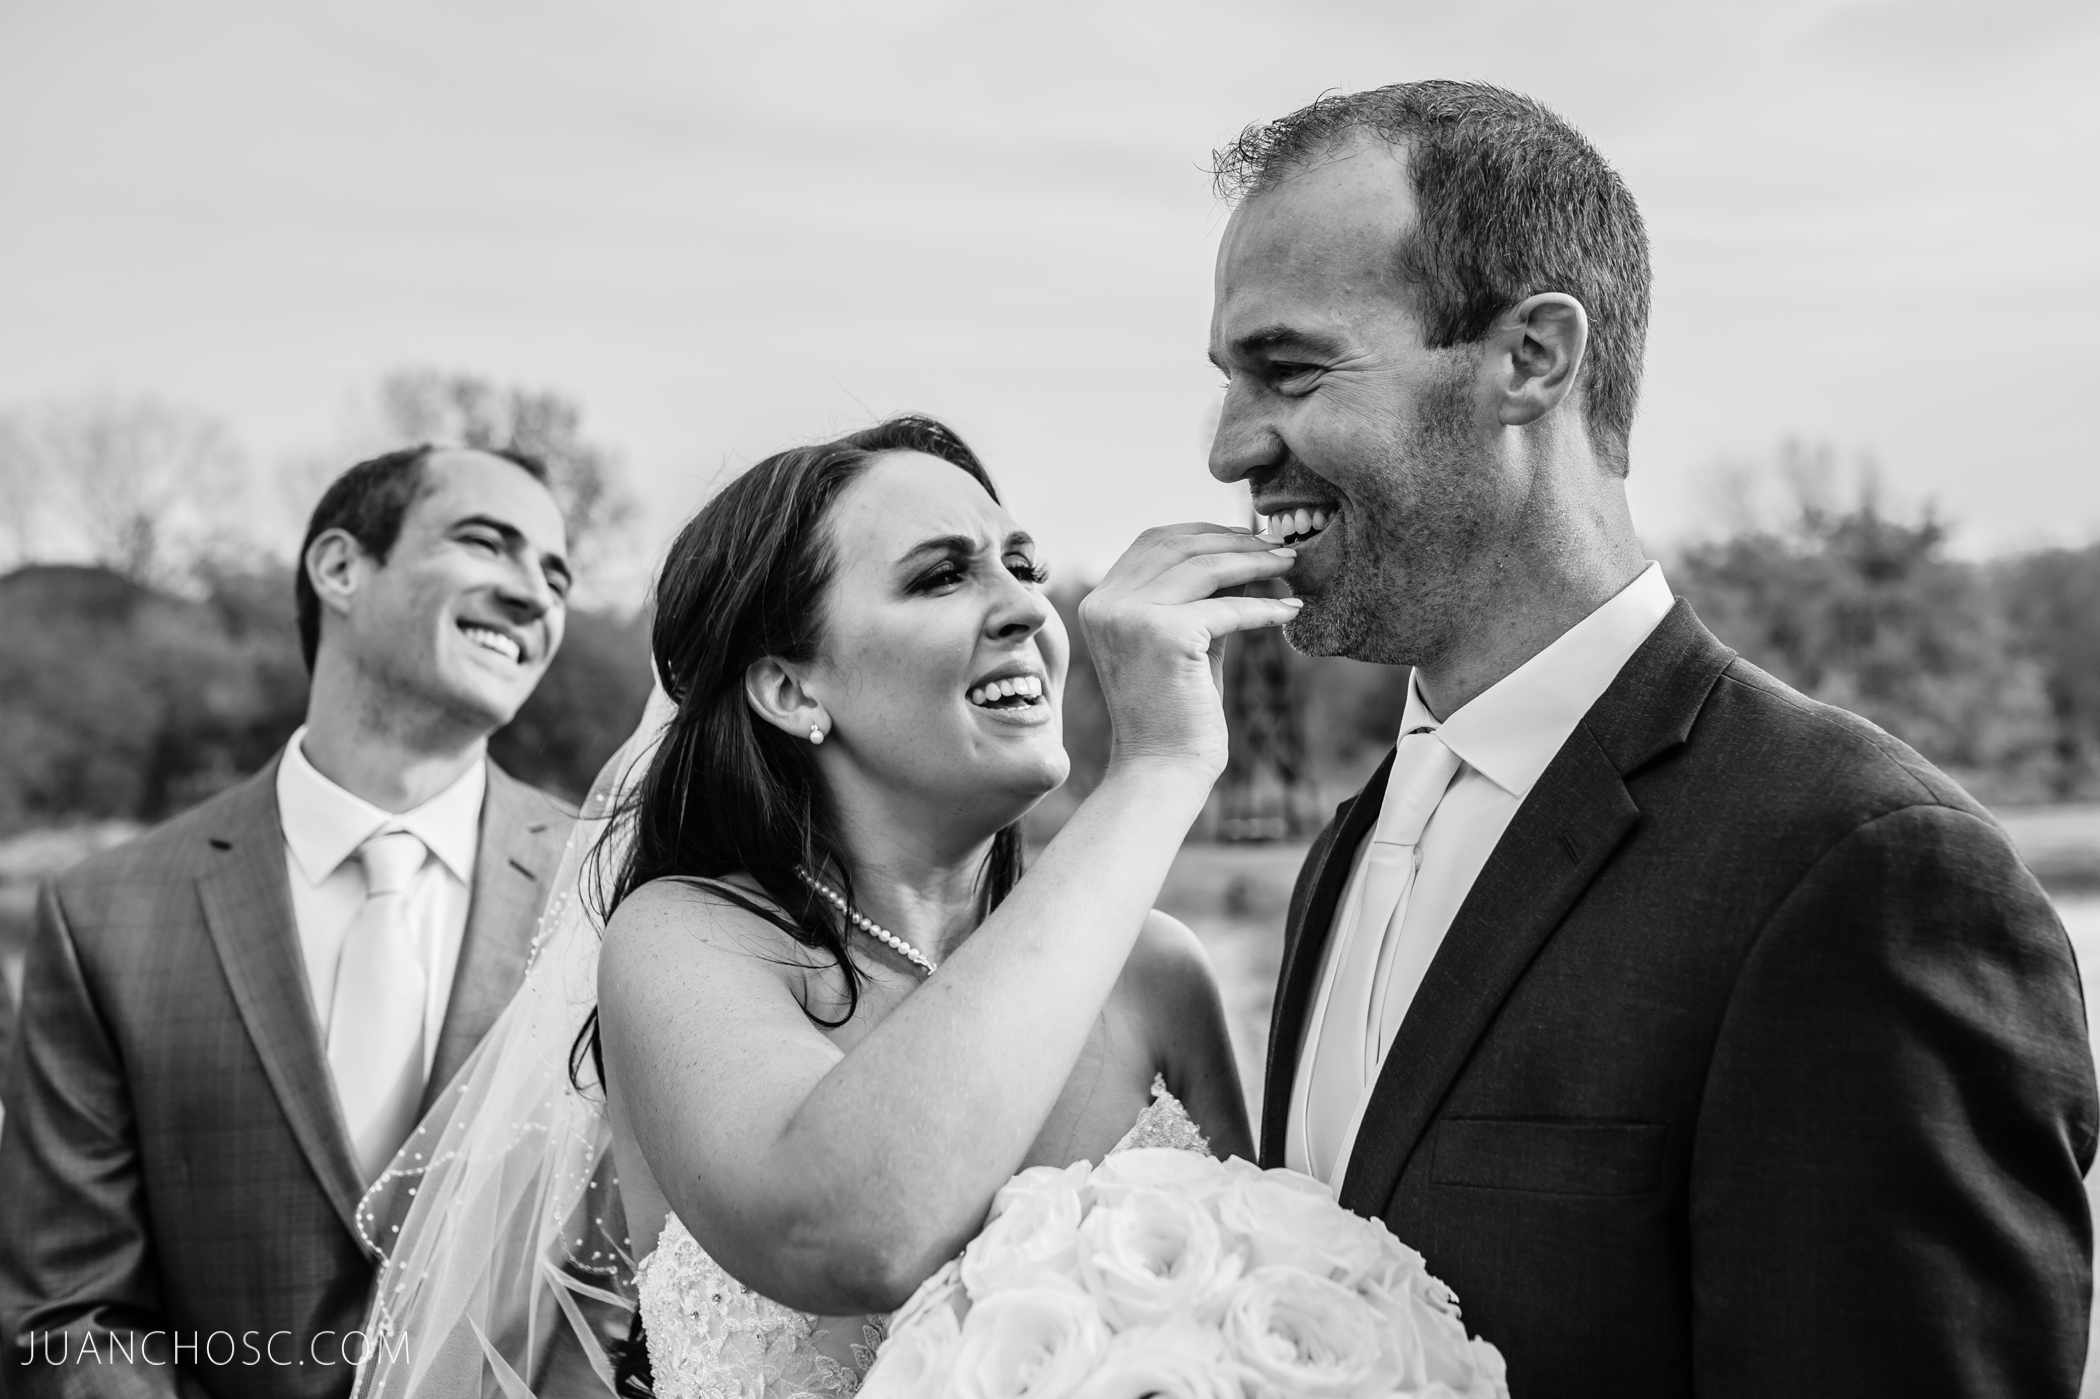 chicago-wedding-photographer